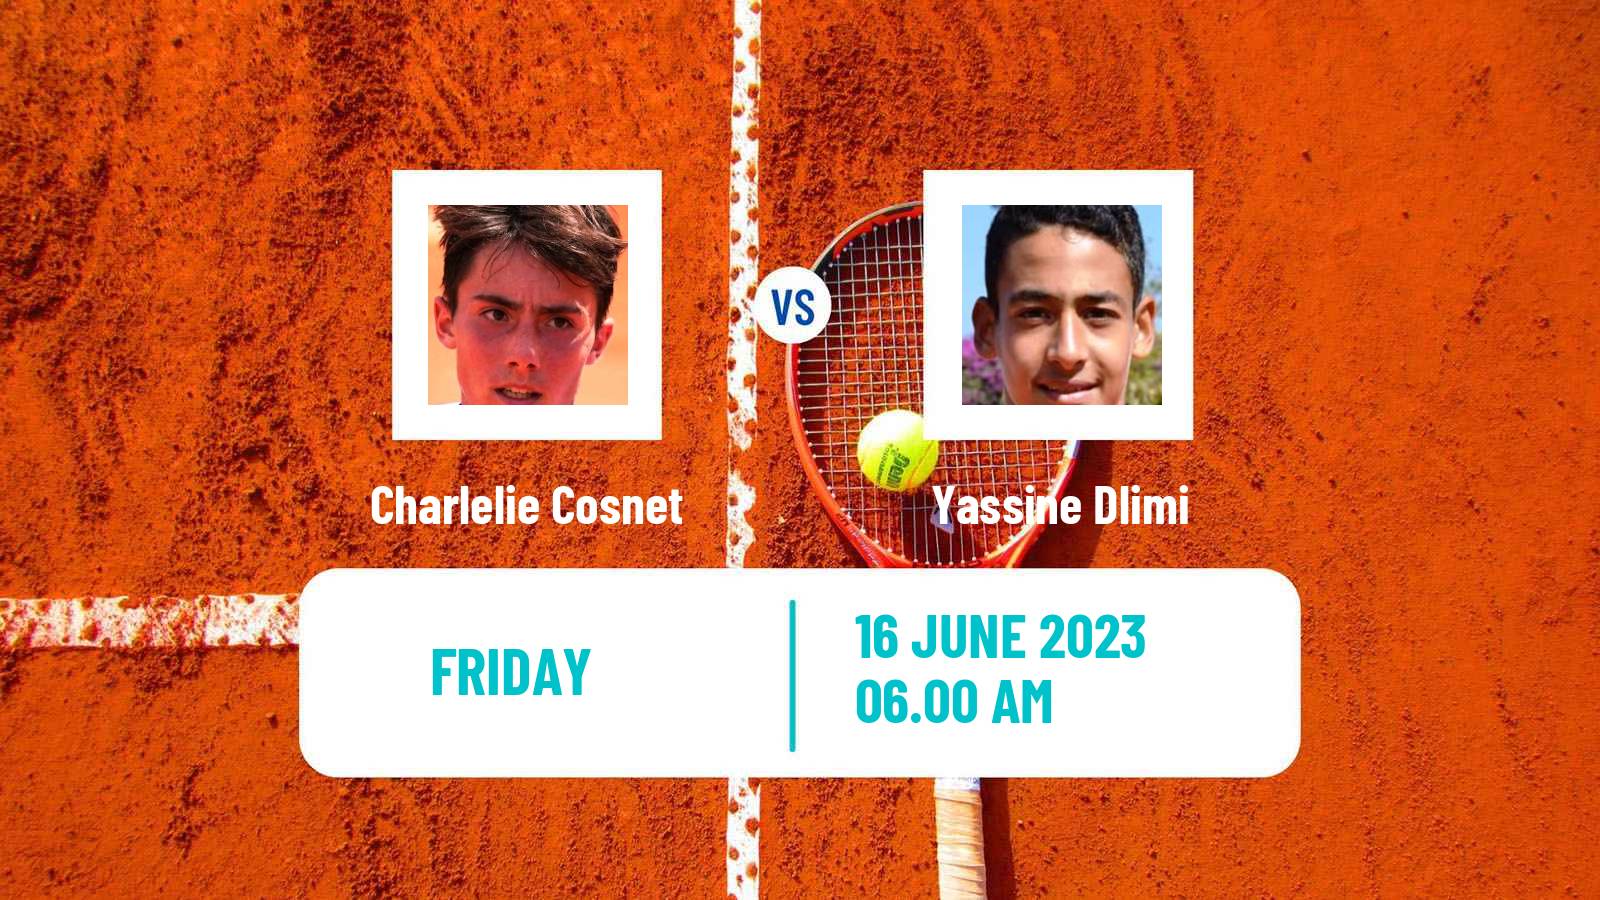 Tennis ITF M15 Rabat Men Charlelie Cosnet - Yassine Dlimi